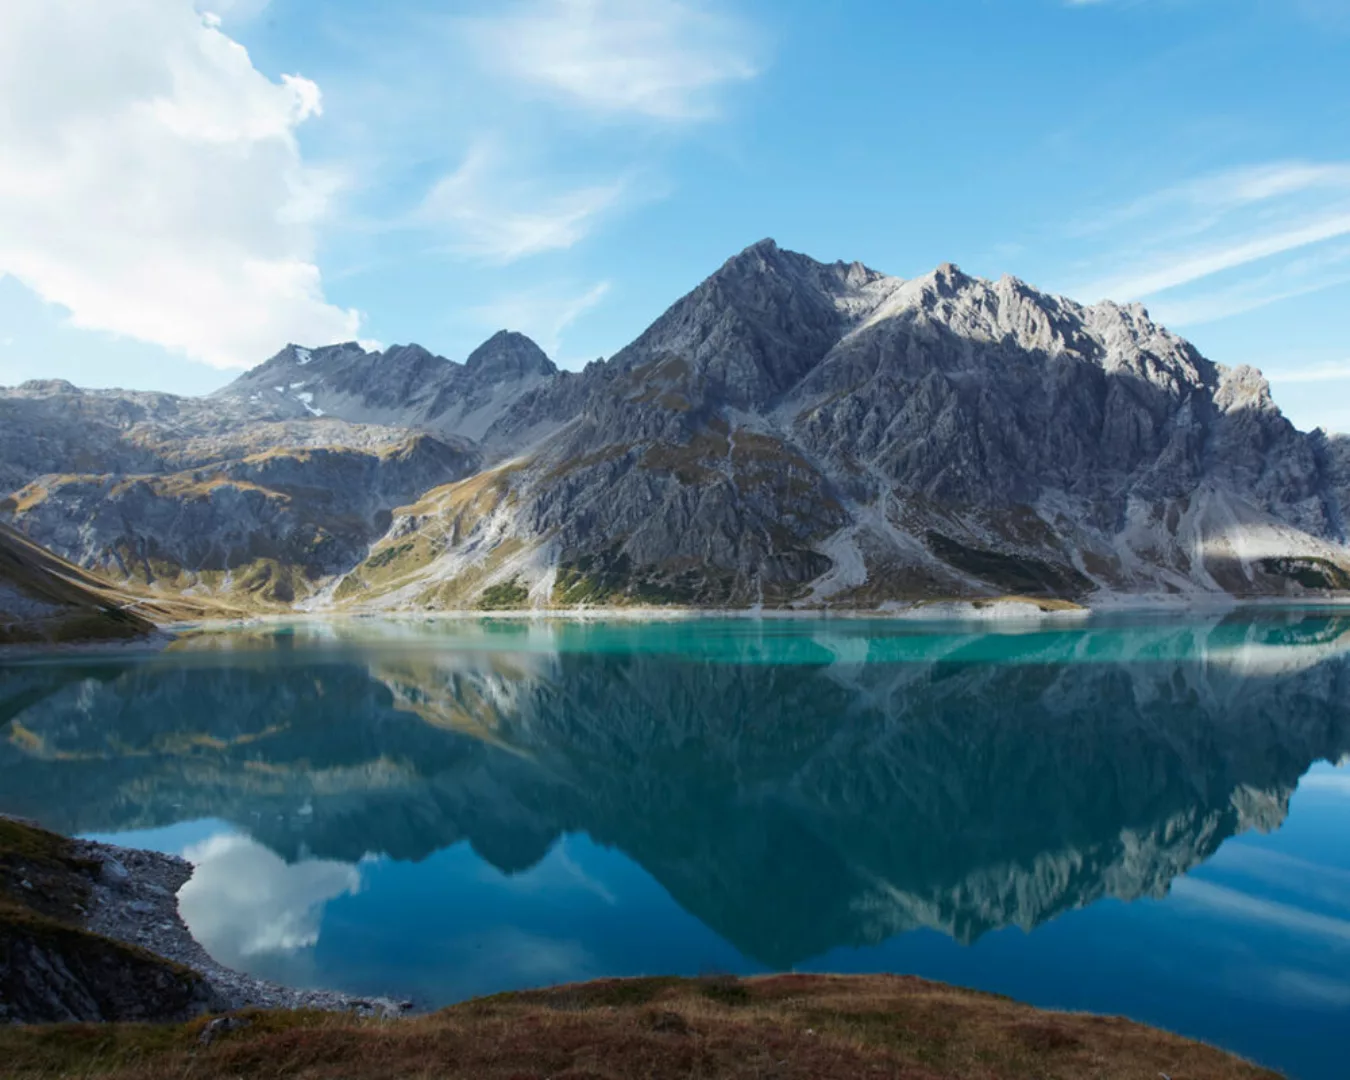 Fototapete "Bergsee klar" 4,00x2,50 m / Glattvlies Brillant günstig online kaufen